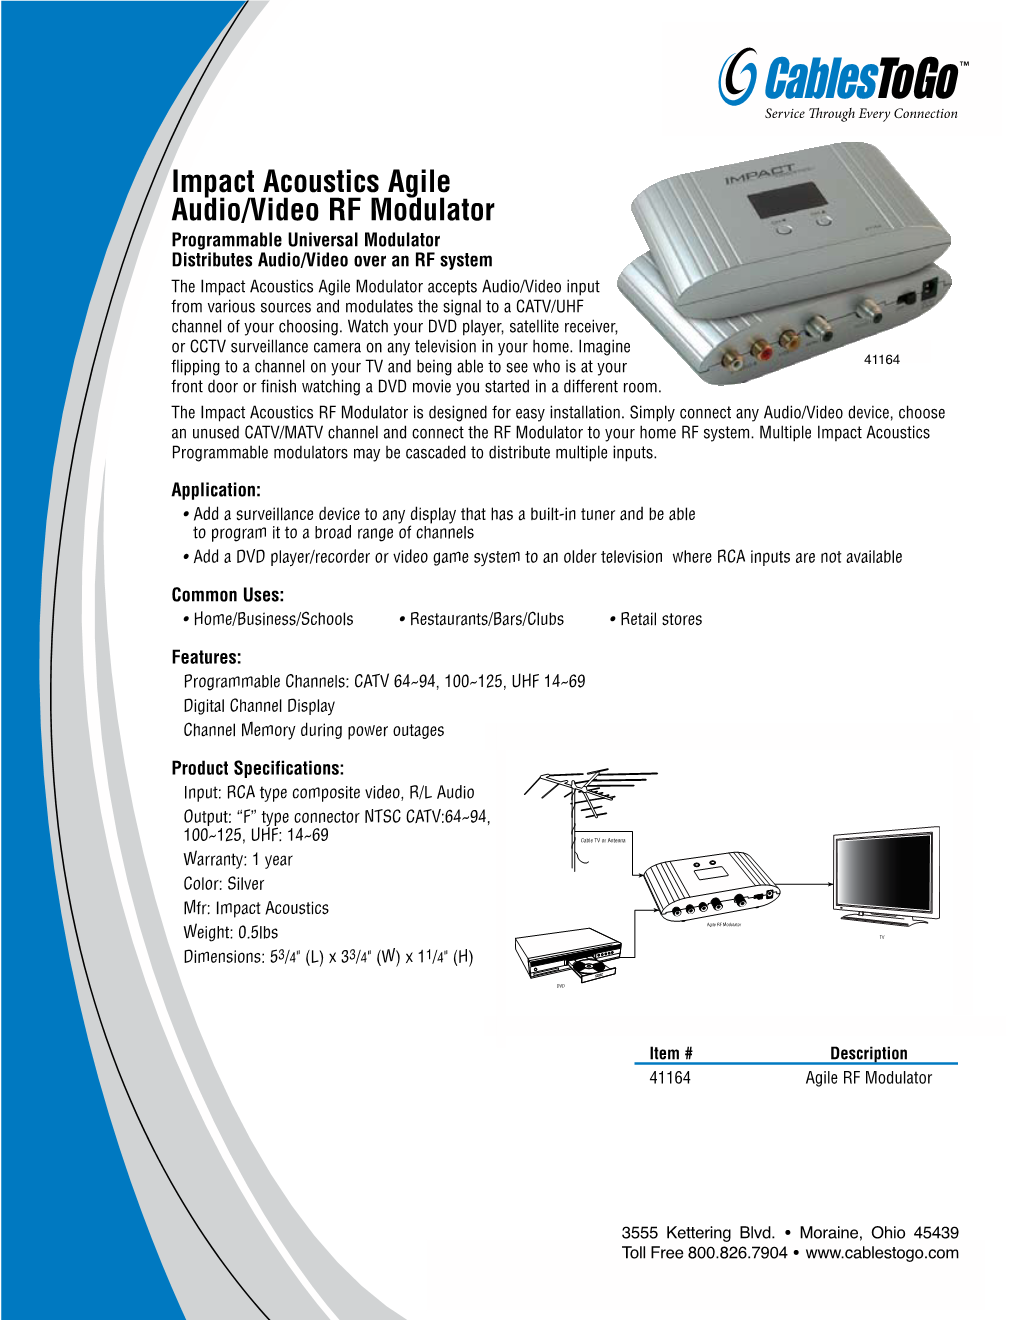 Impact Acoustics Agile Audio/Video RF Modulator